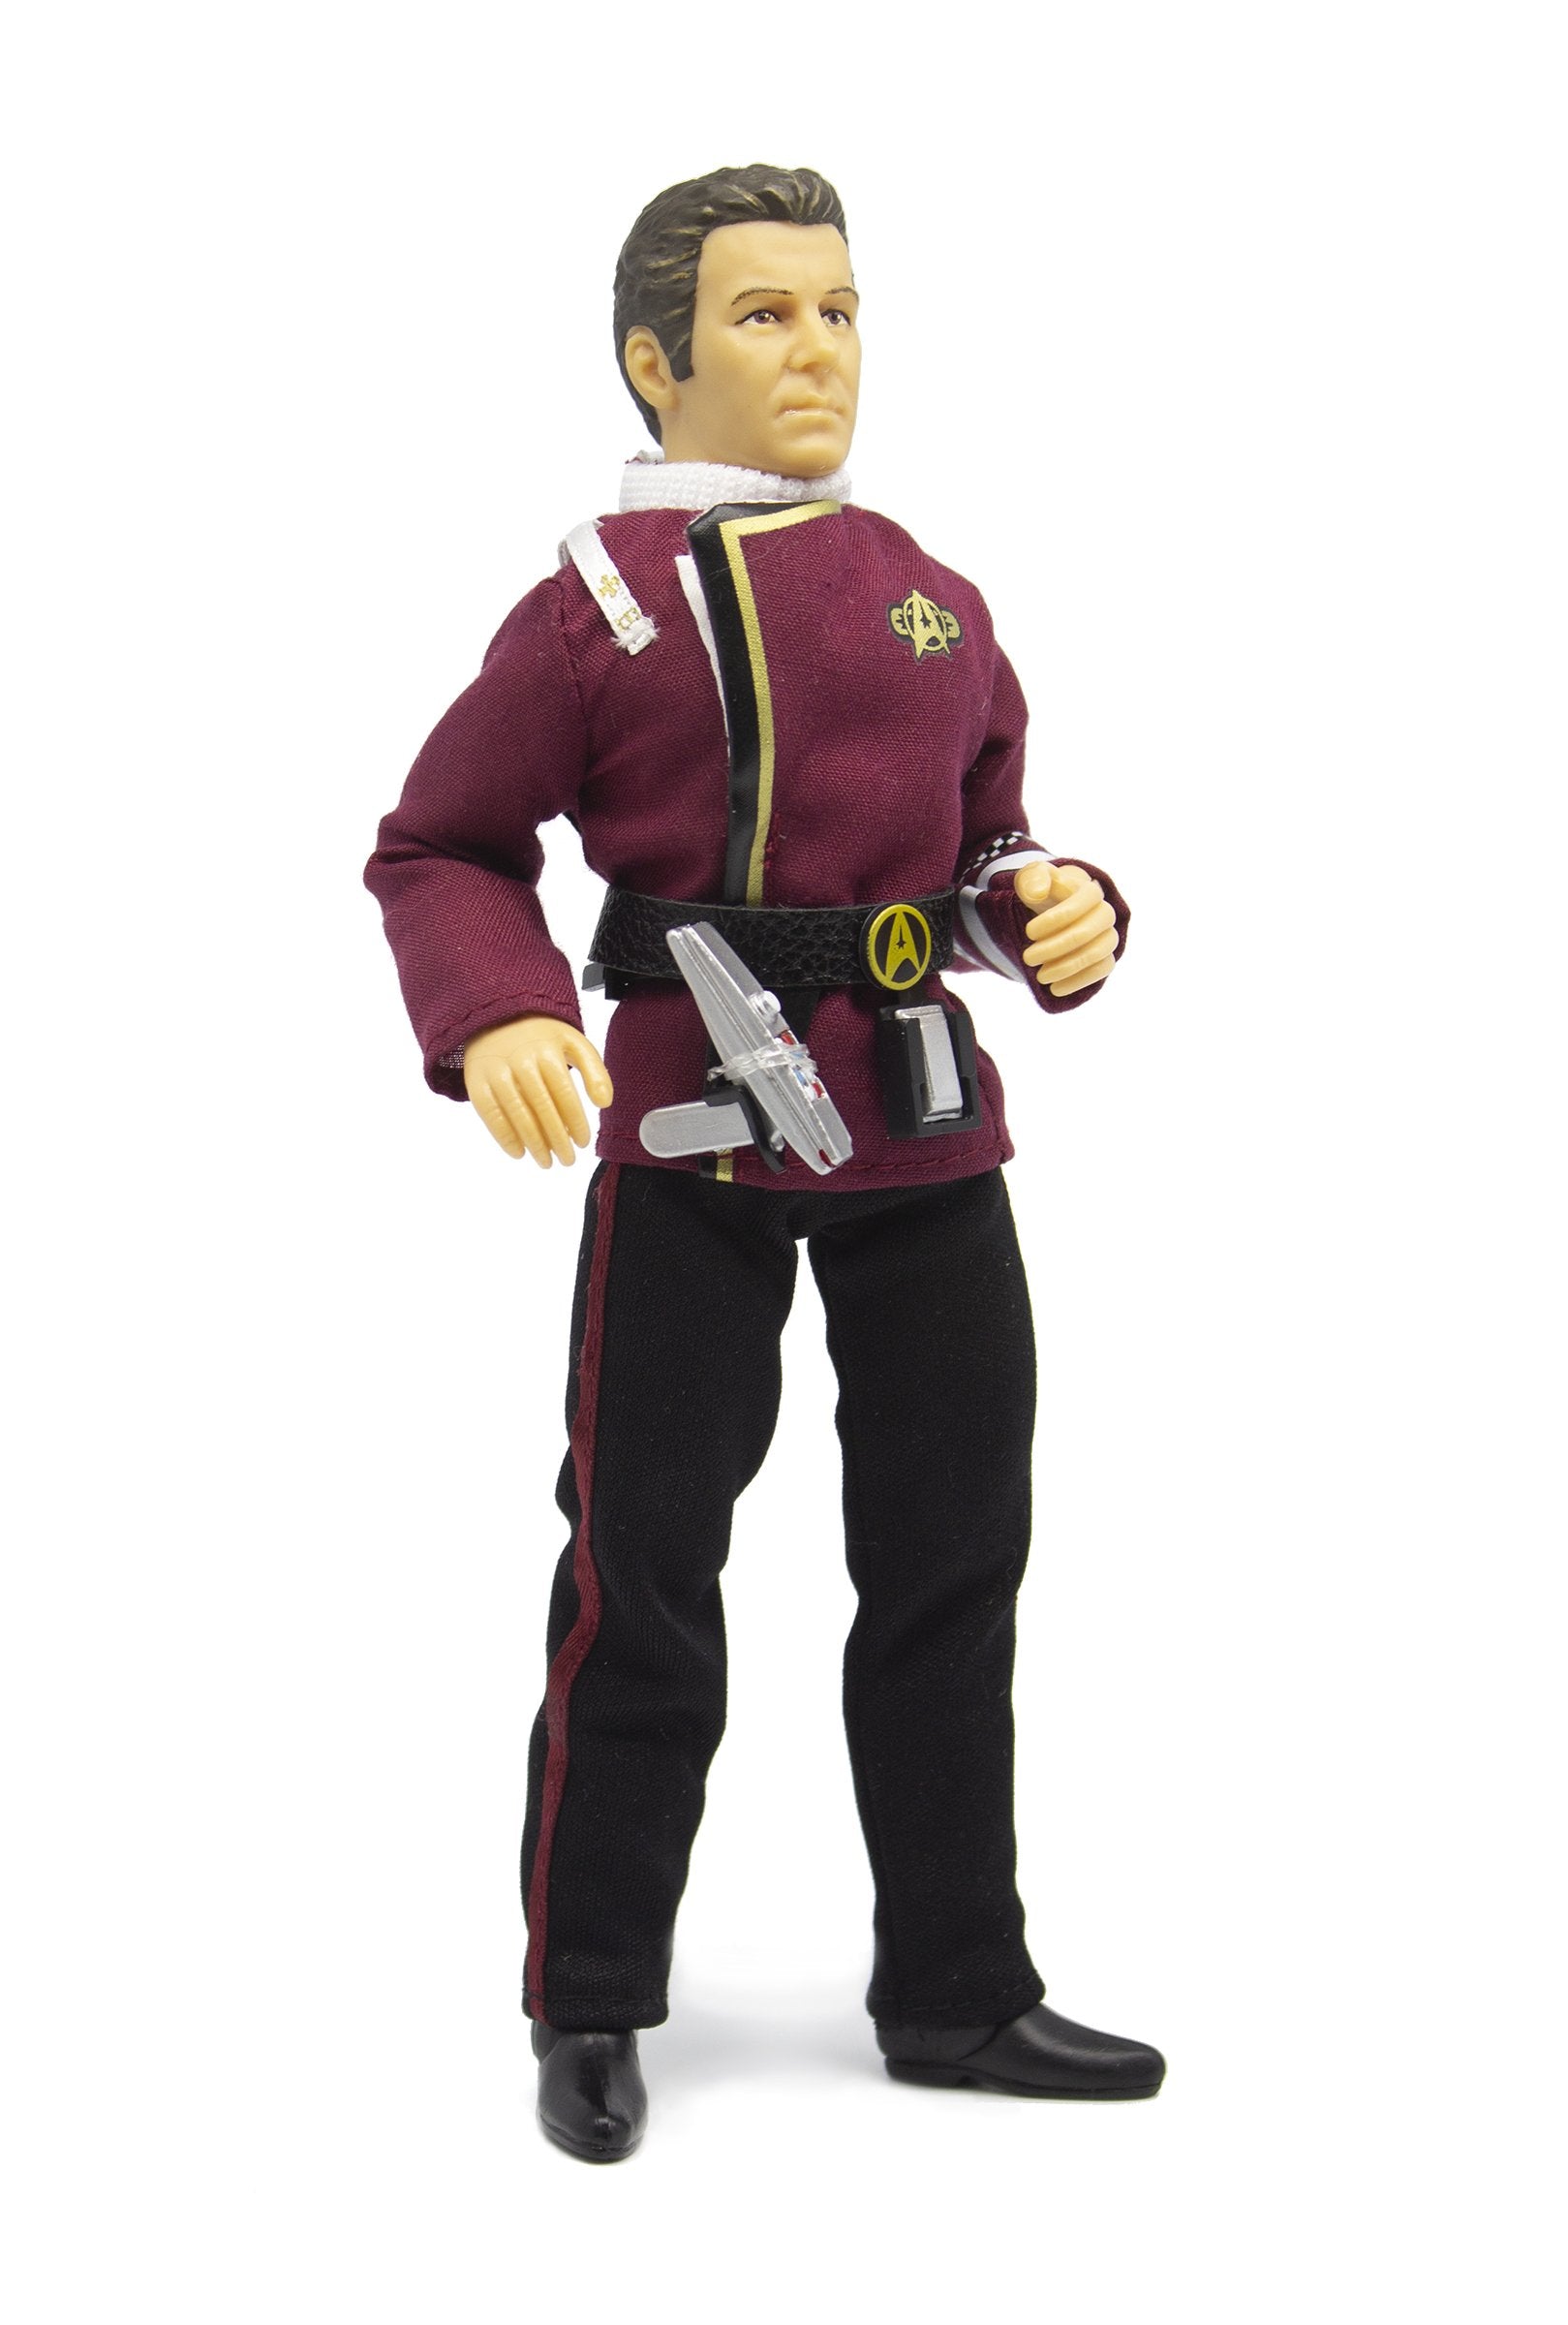 Mego Star Trek Wave 7 - Wrath of Khan - Admiral Kirk 8" Action Figure - Zlc Collectibles